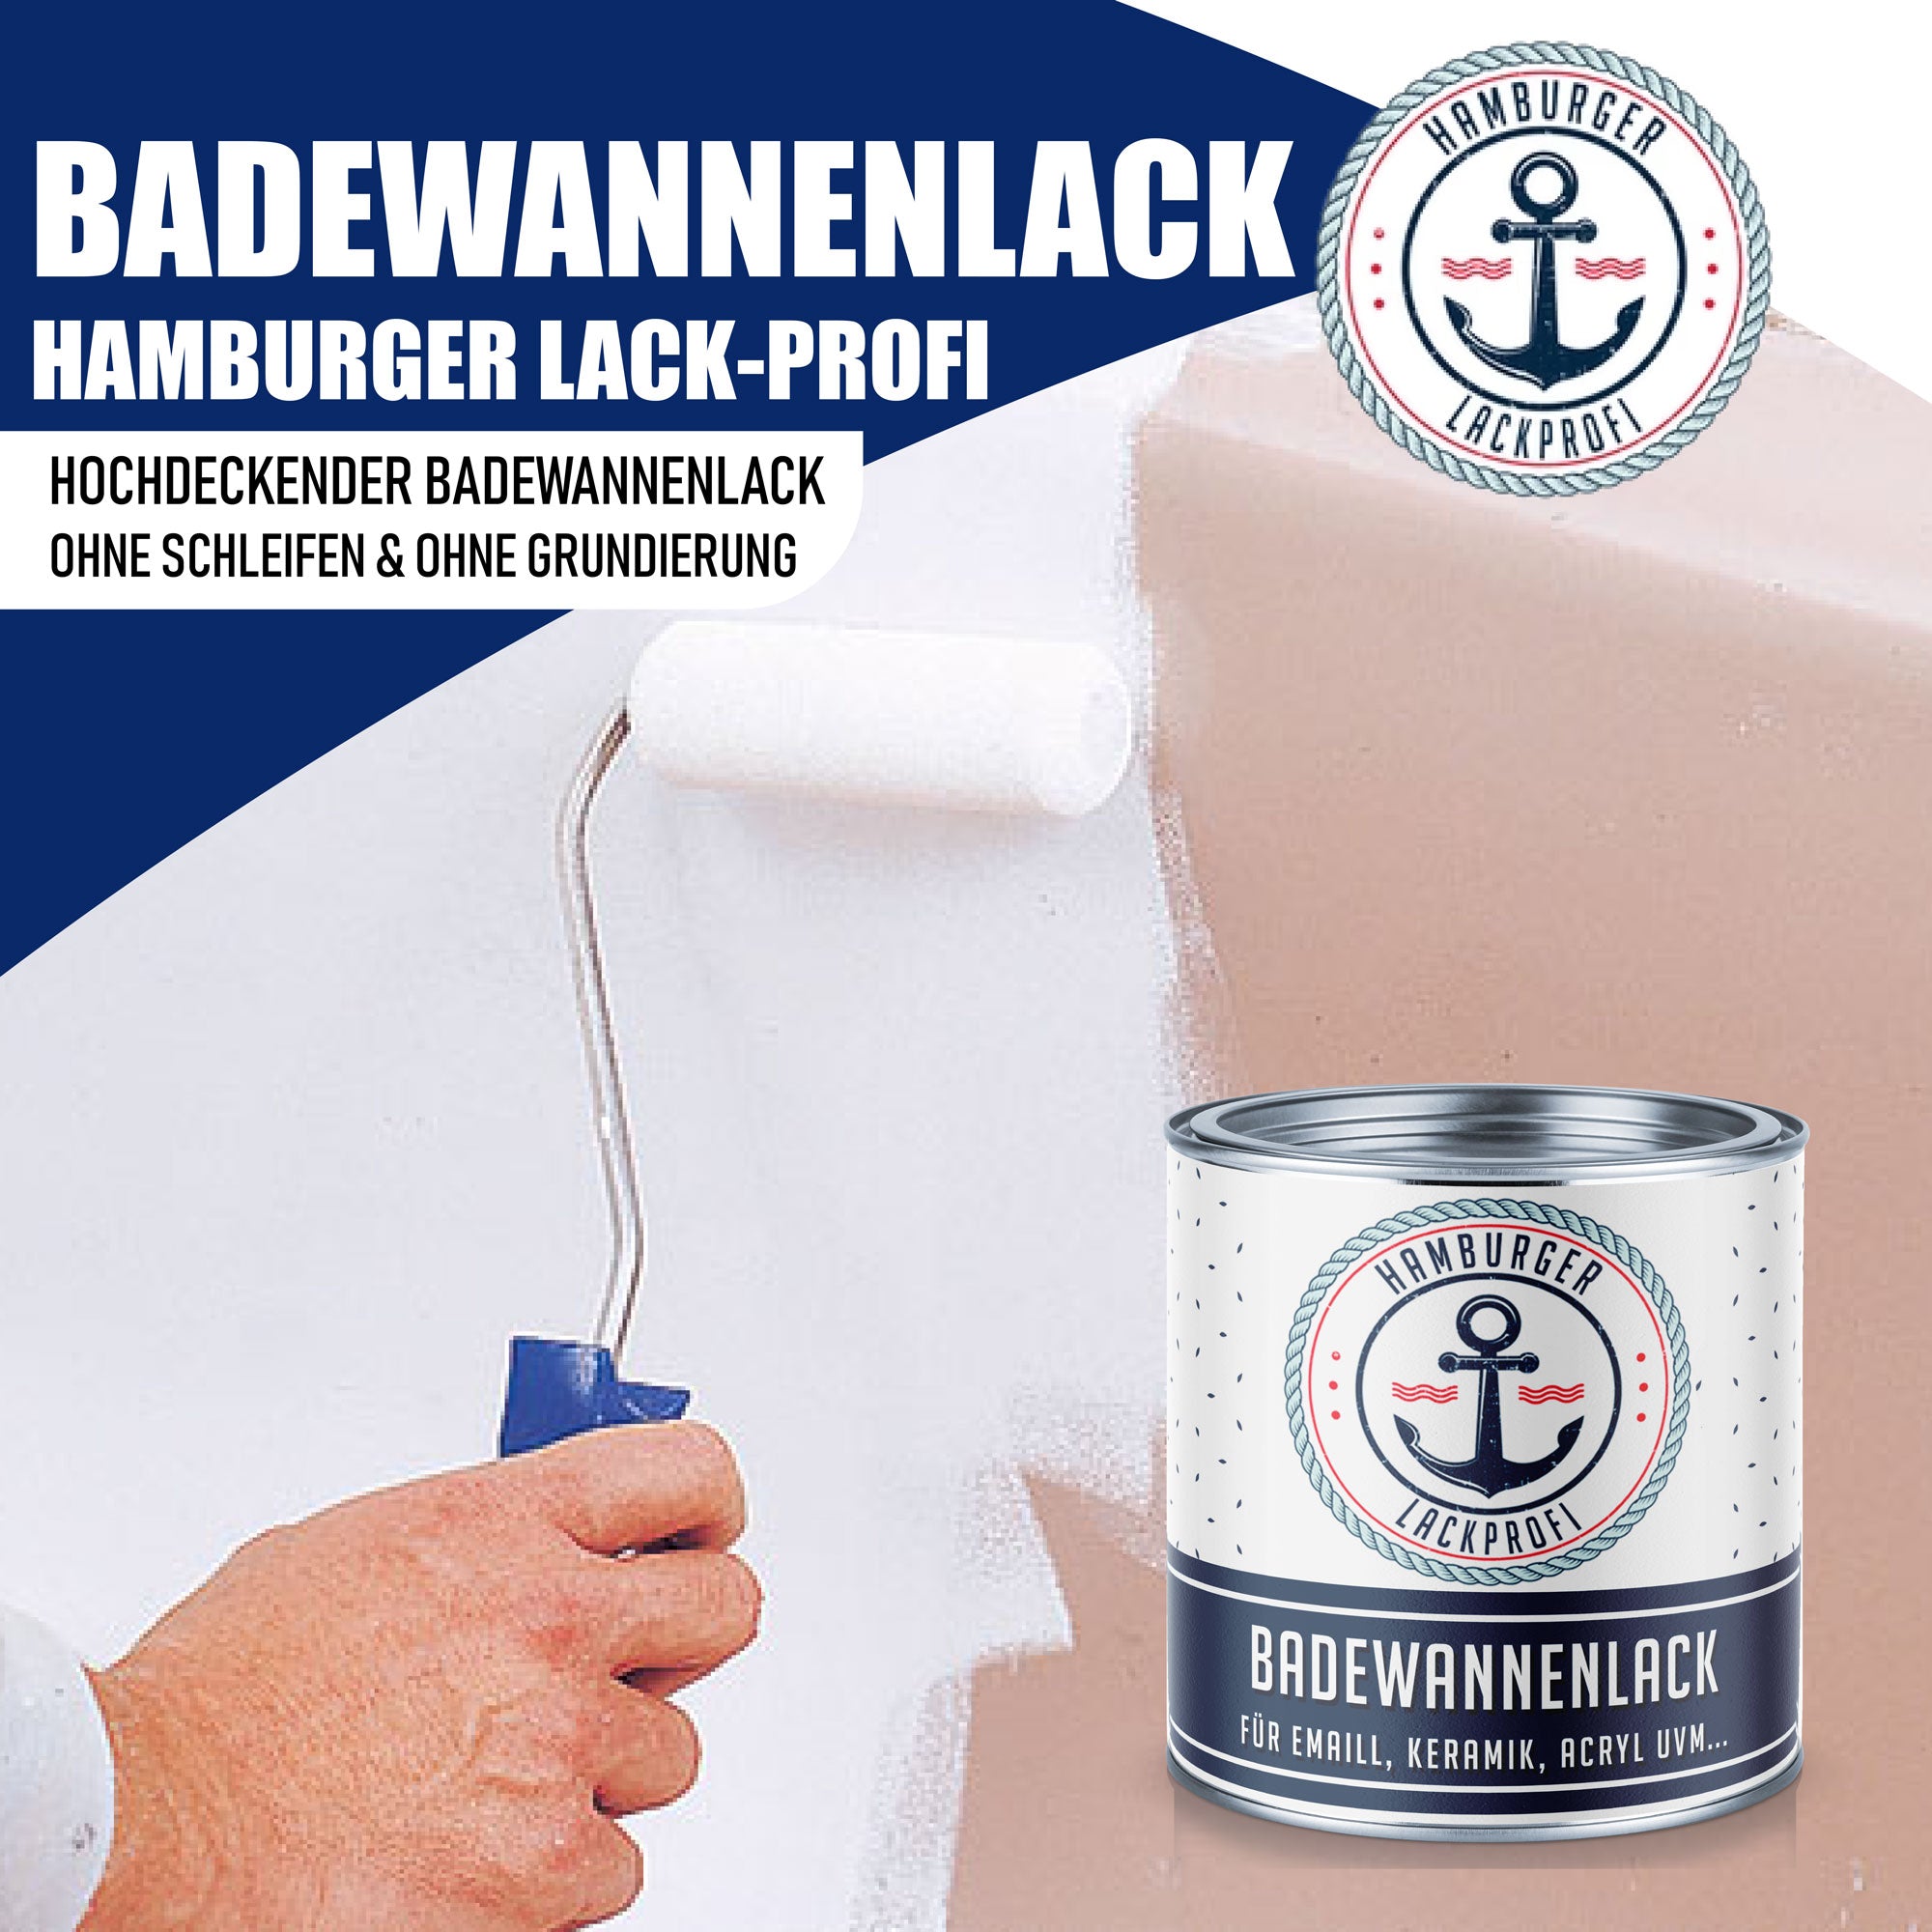 Hamburger Lack-Profi 2K Badewannenlack Rotorange RAL 2001 - Glänzend / Seidenmatt / Matt